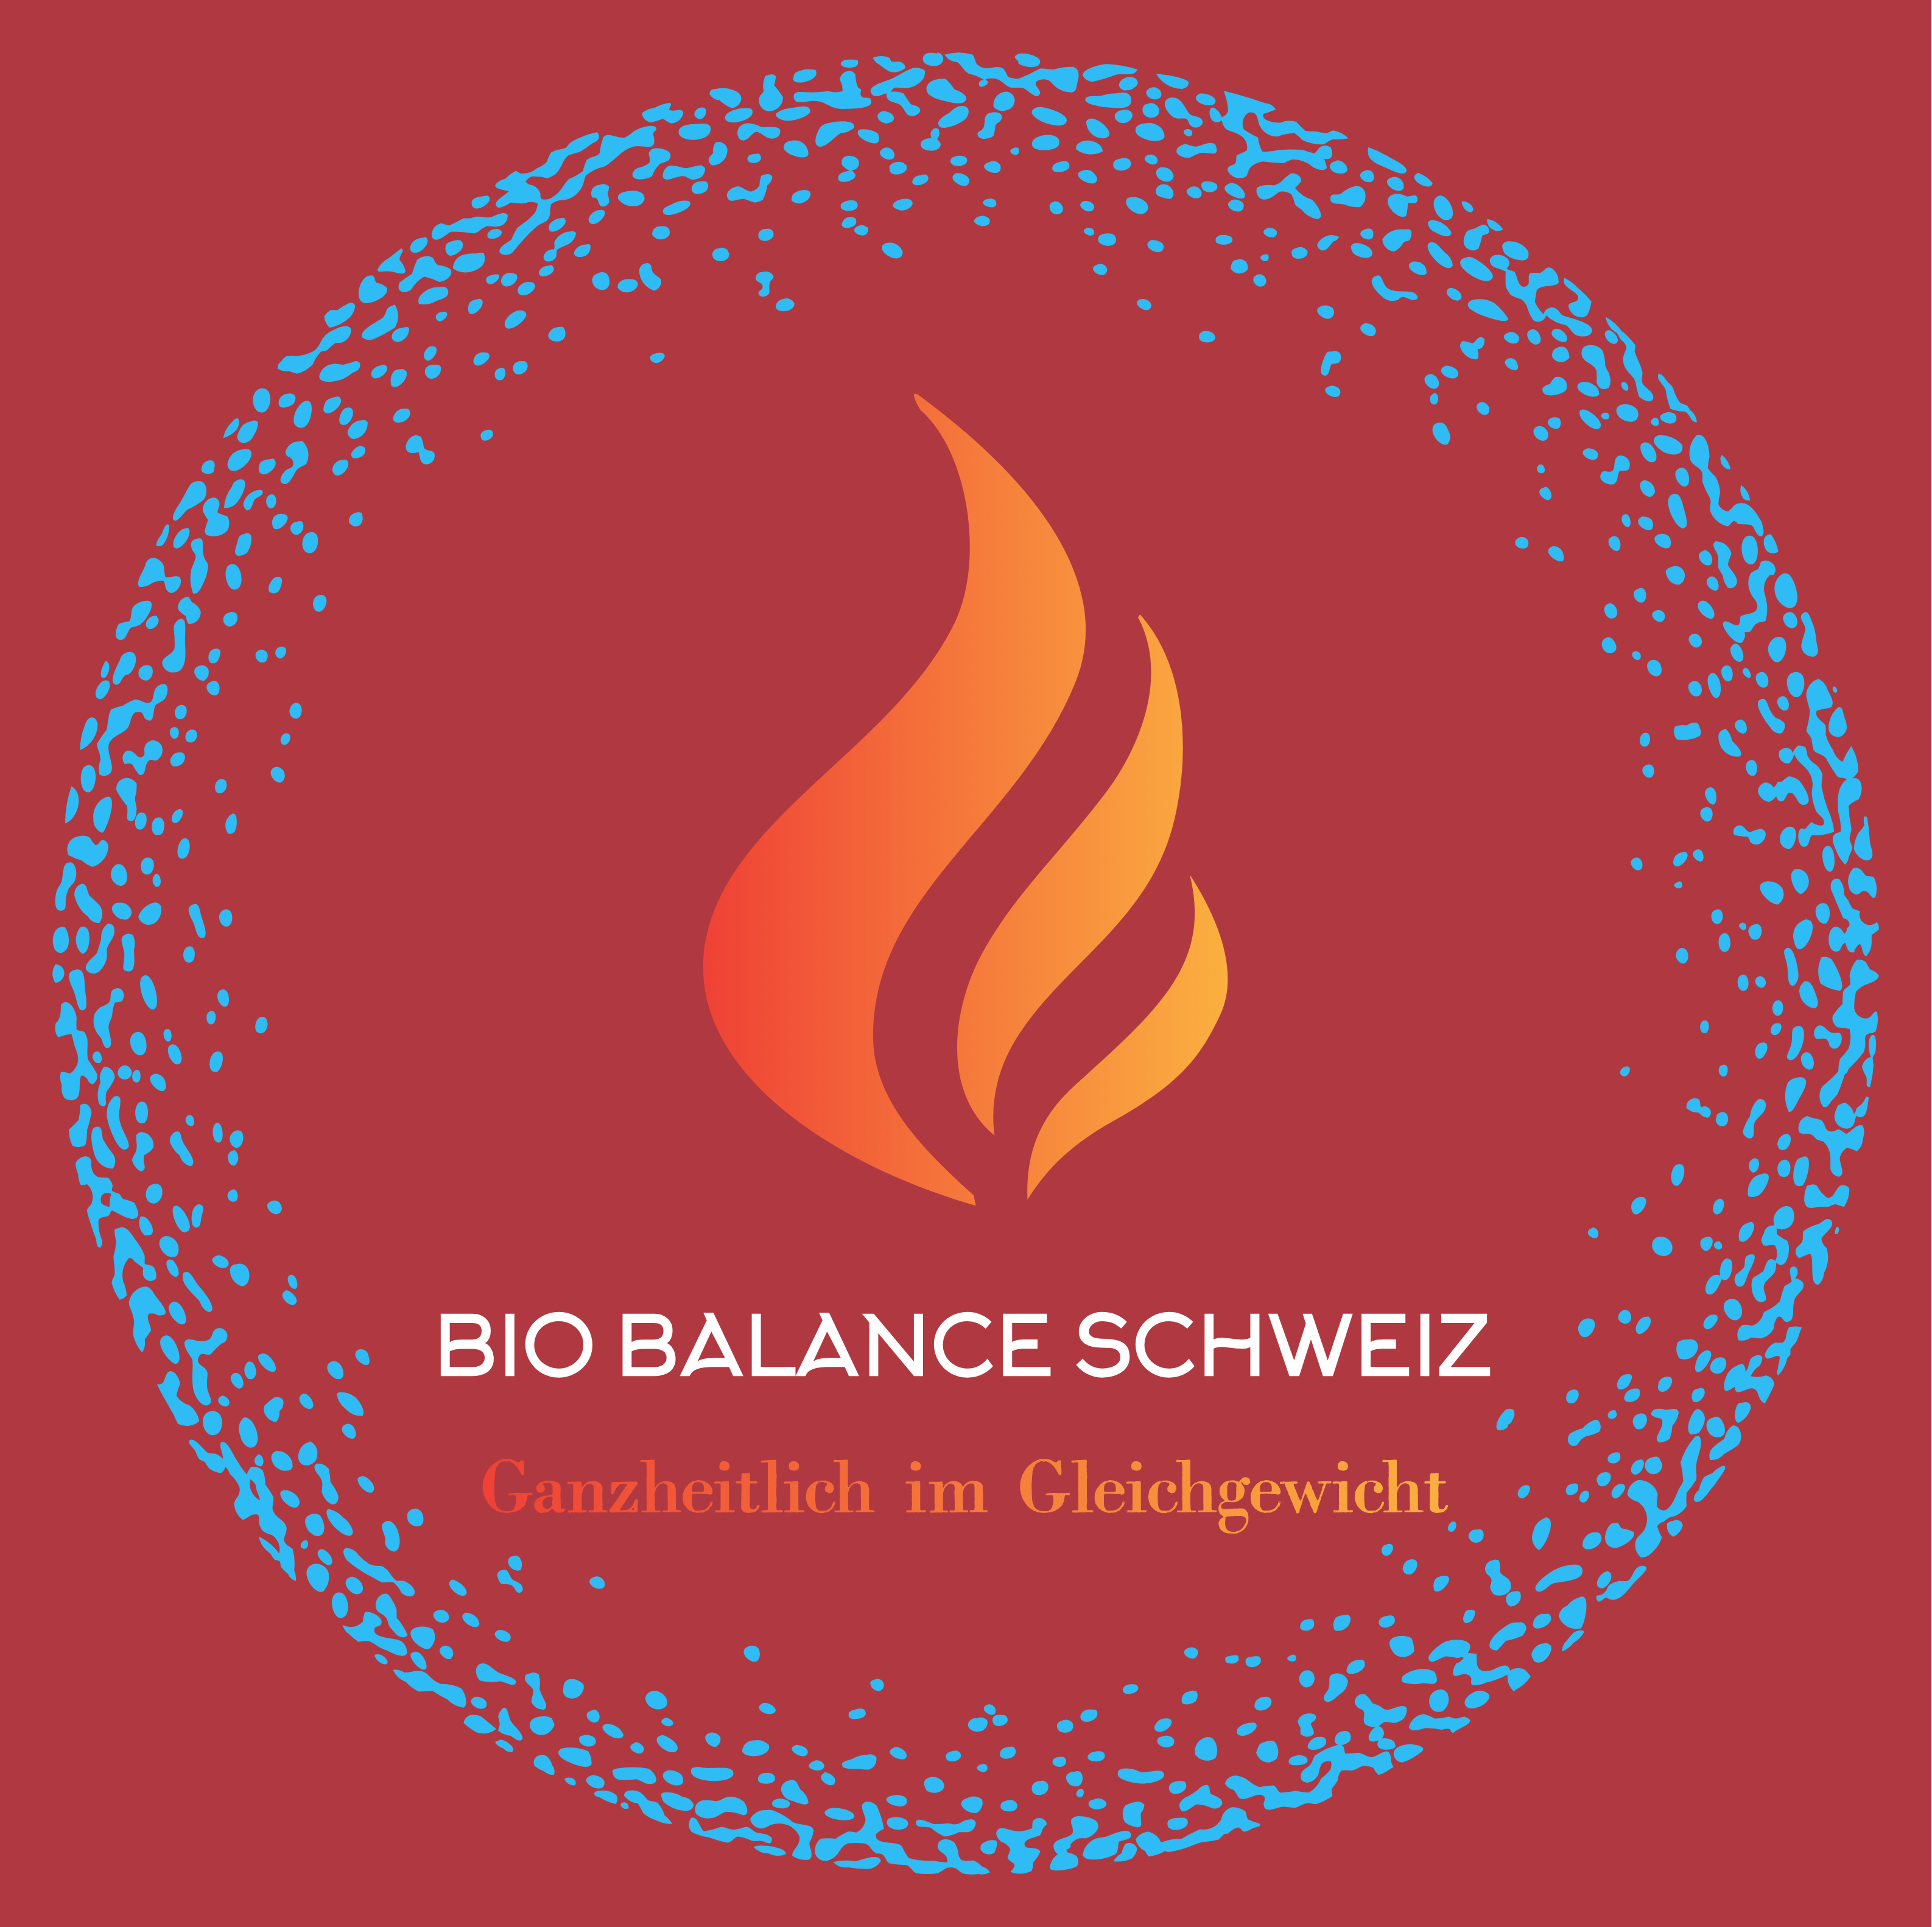 www.biobalance-schweiz.ch